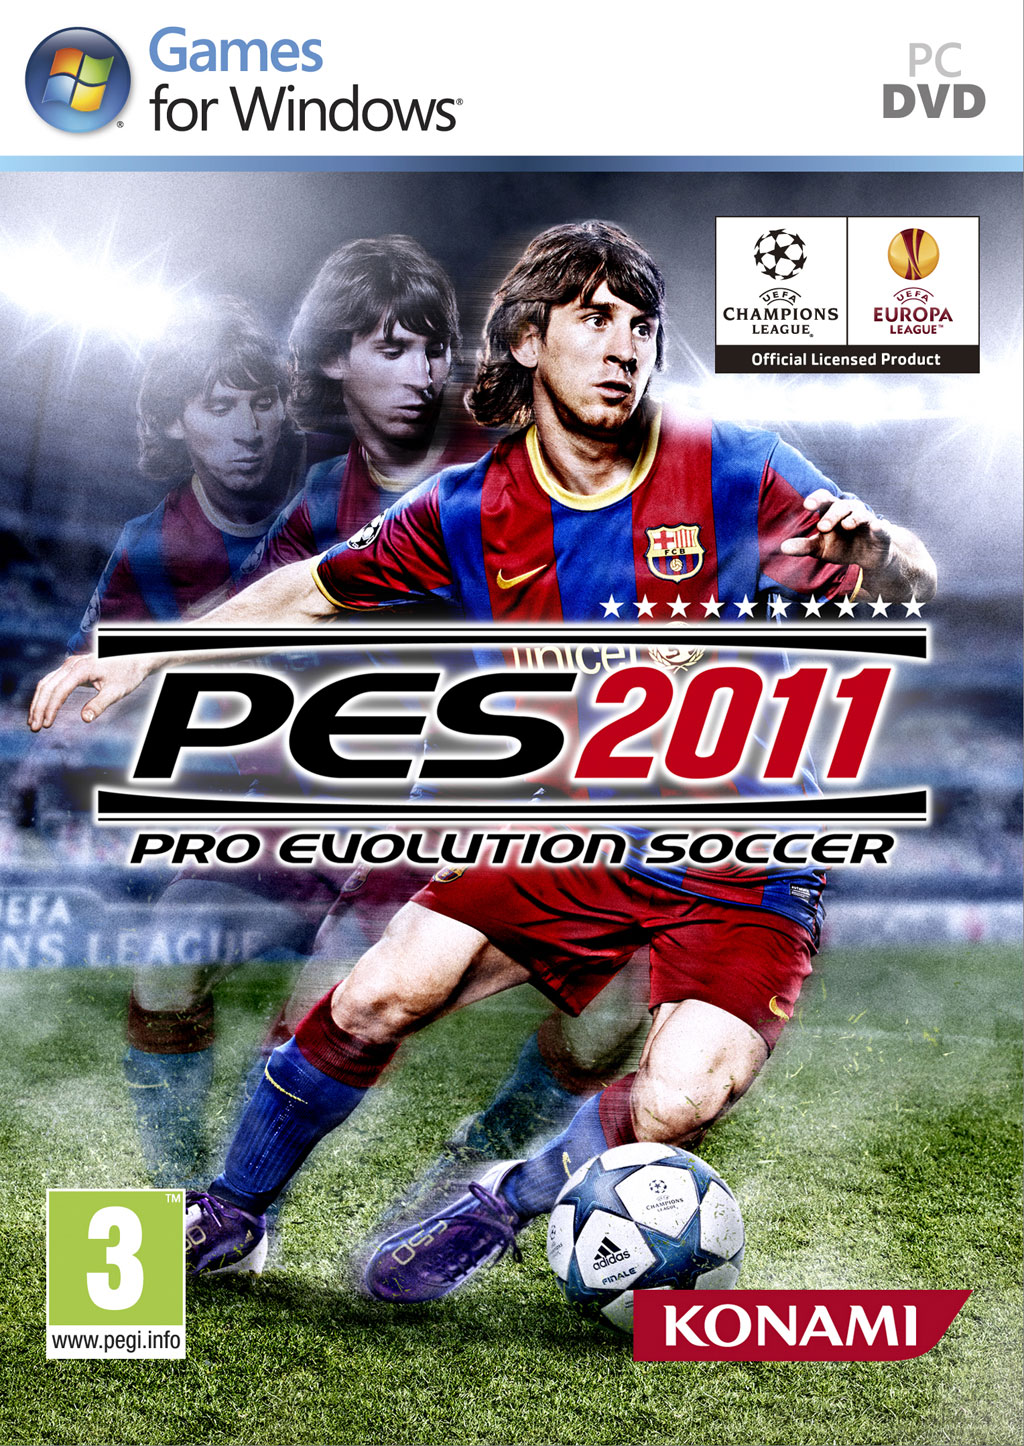 Pro evolution soccer 2013 pc